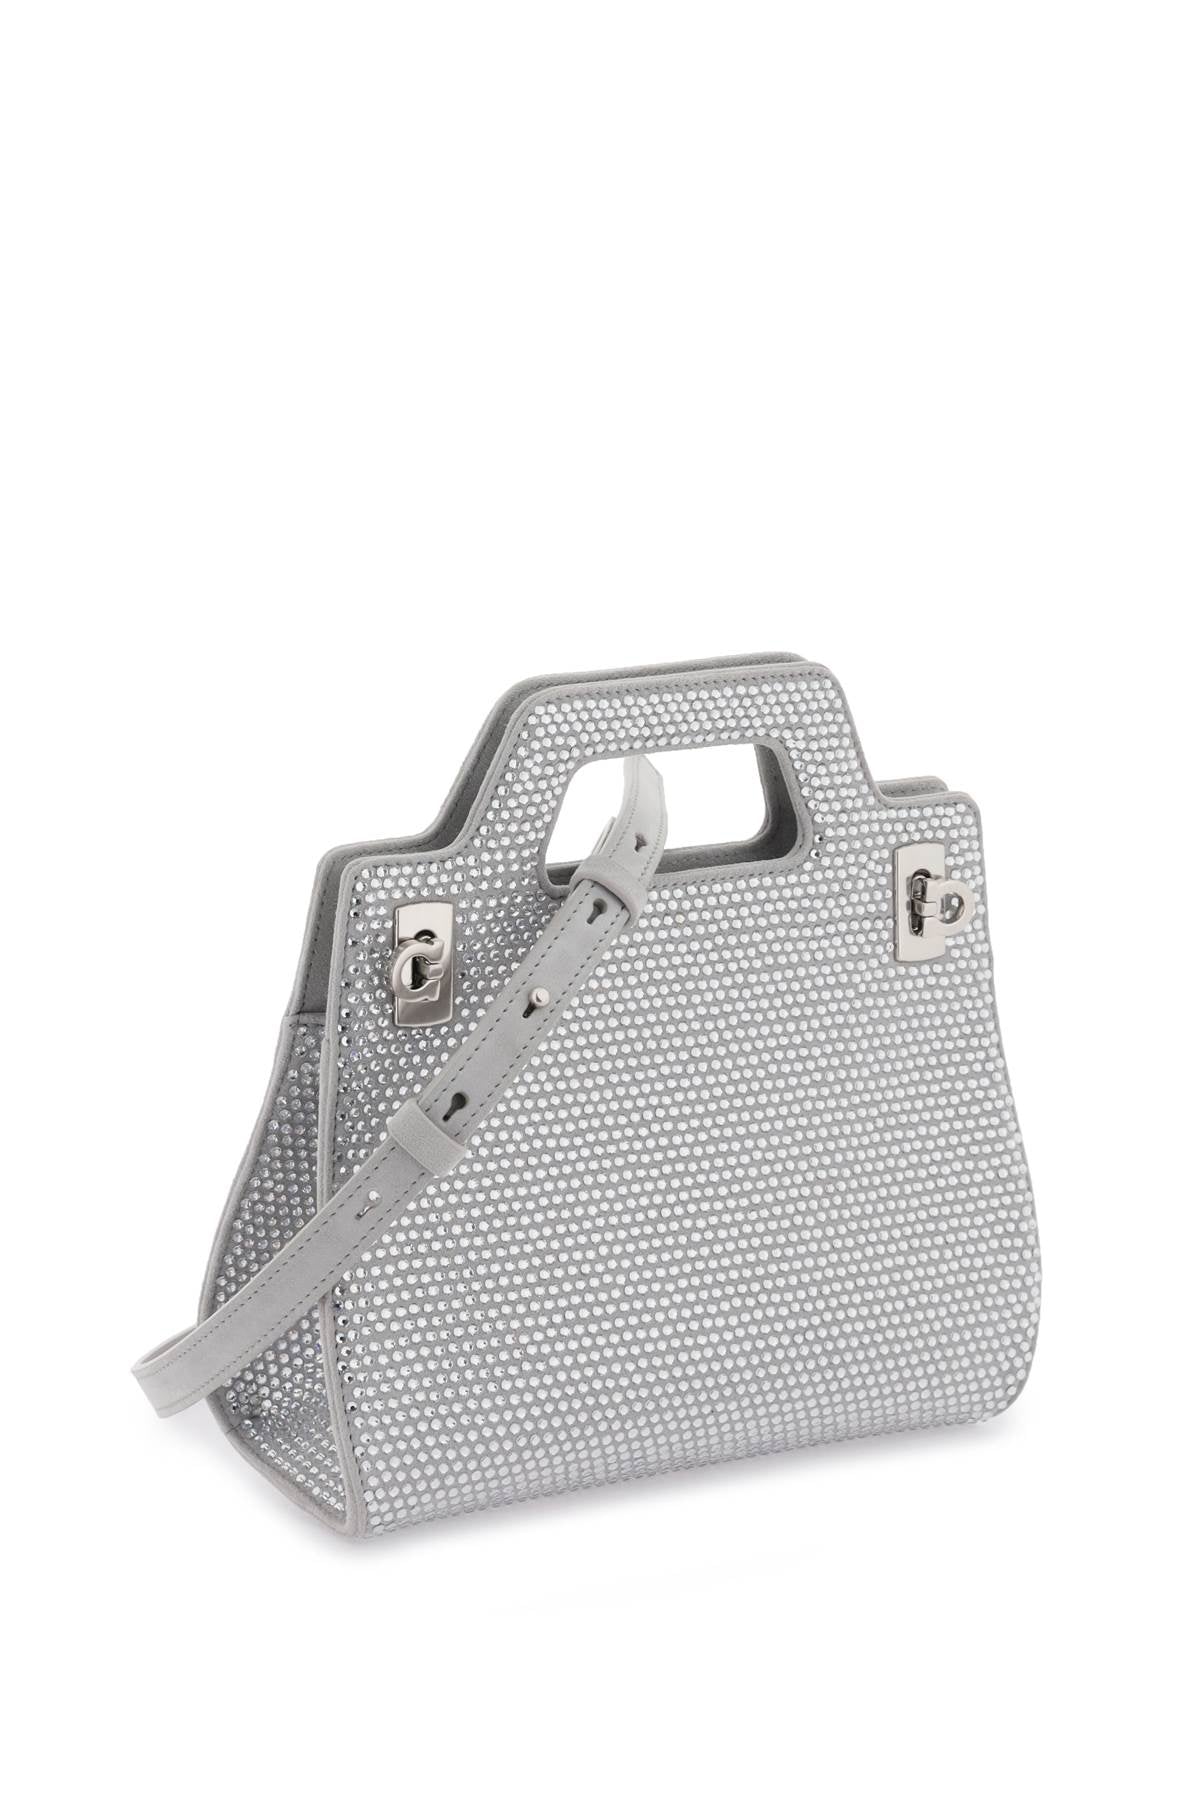 FERRAGAMO Crystal-Studded Suede Mini Handbag with Geometric Design & Silver Accents - Gray